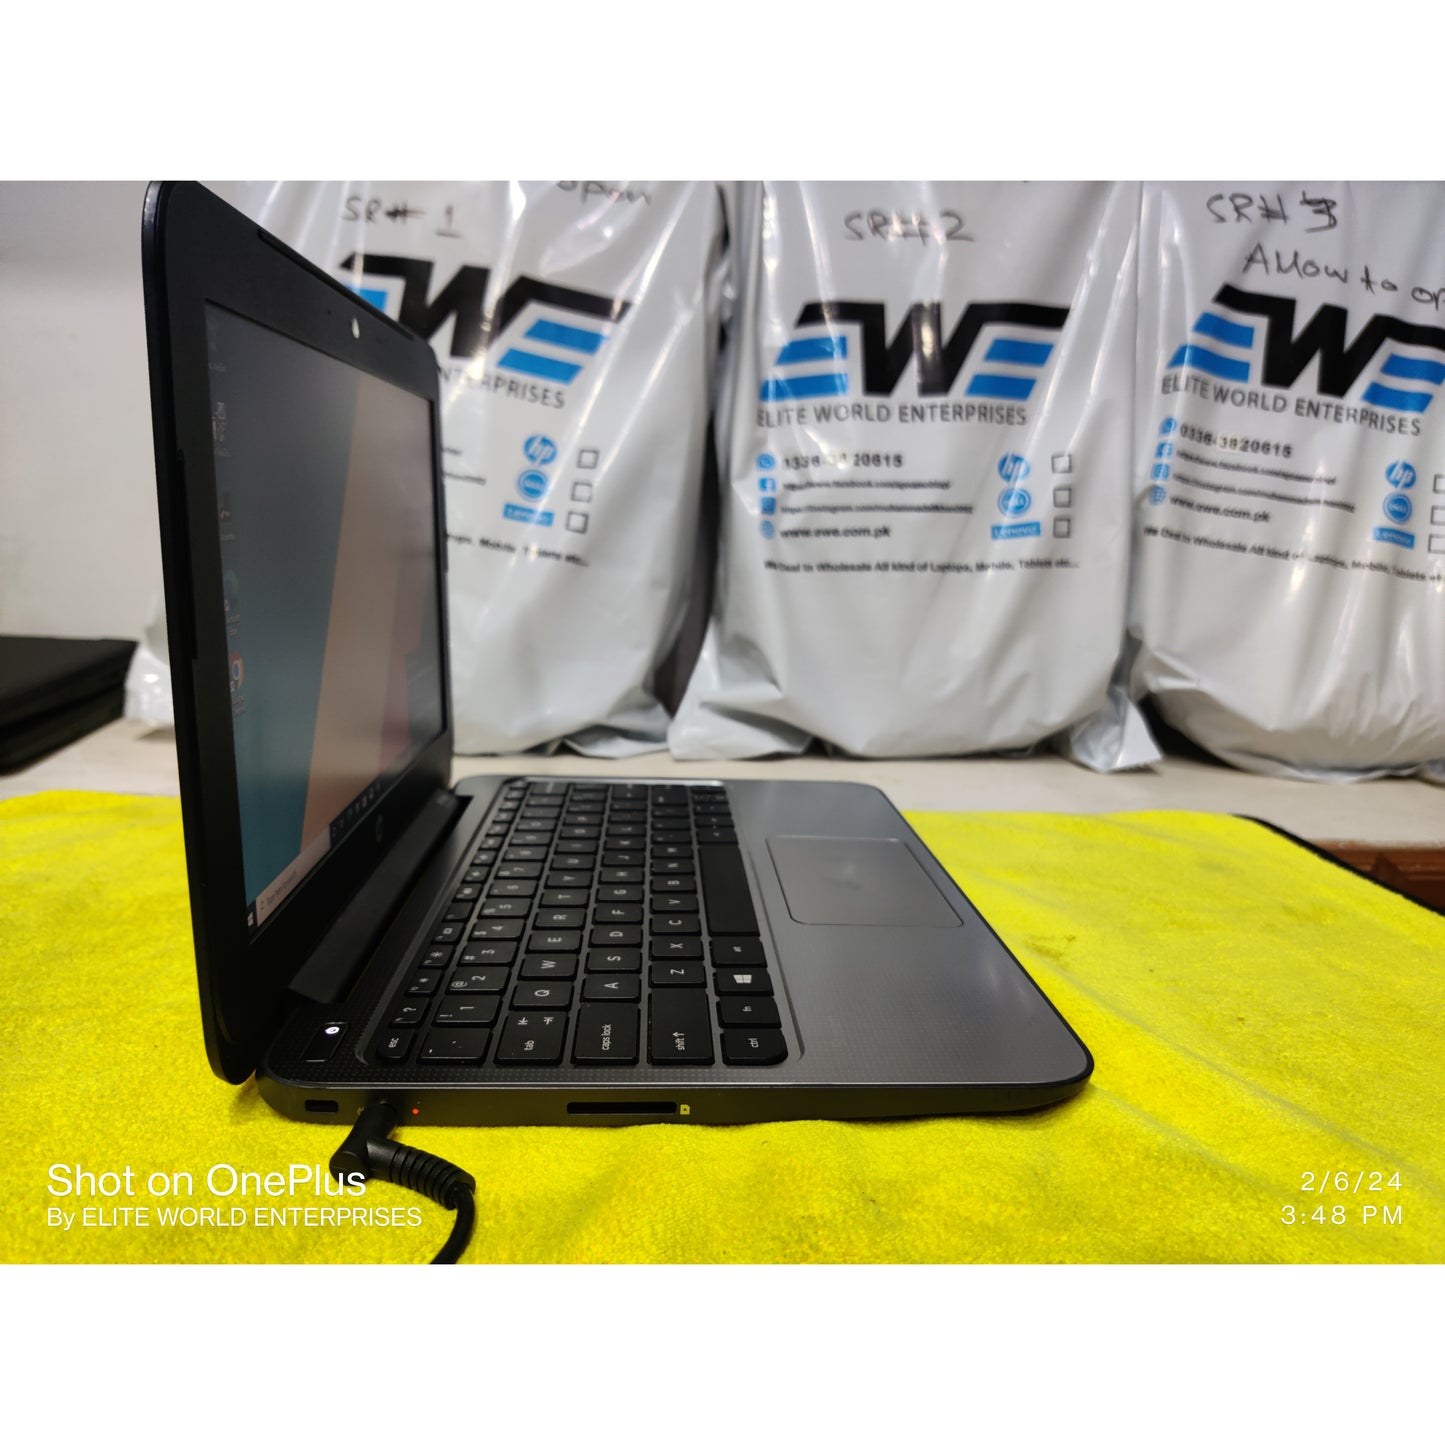 HP Stream 11 Pro Notebook PC Laptop - 2GB Ram 32GB Solid State Drive – Intel HD Graphics